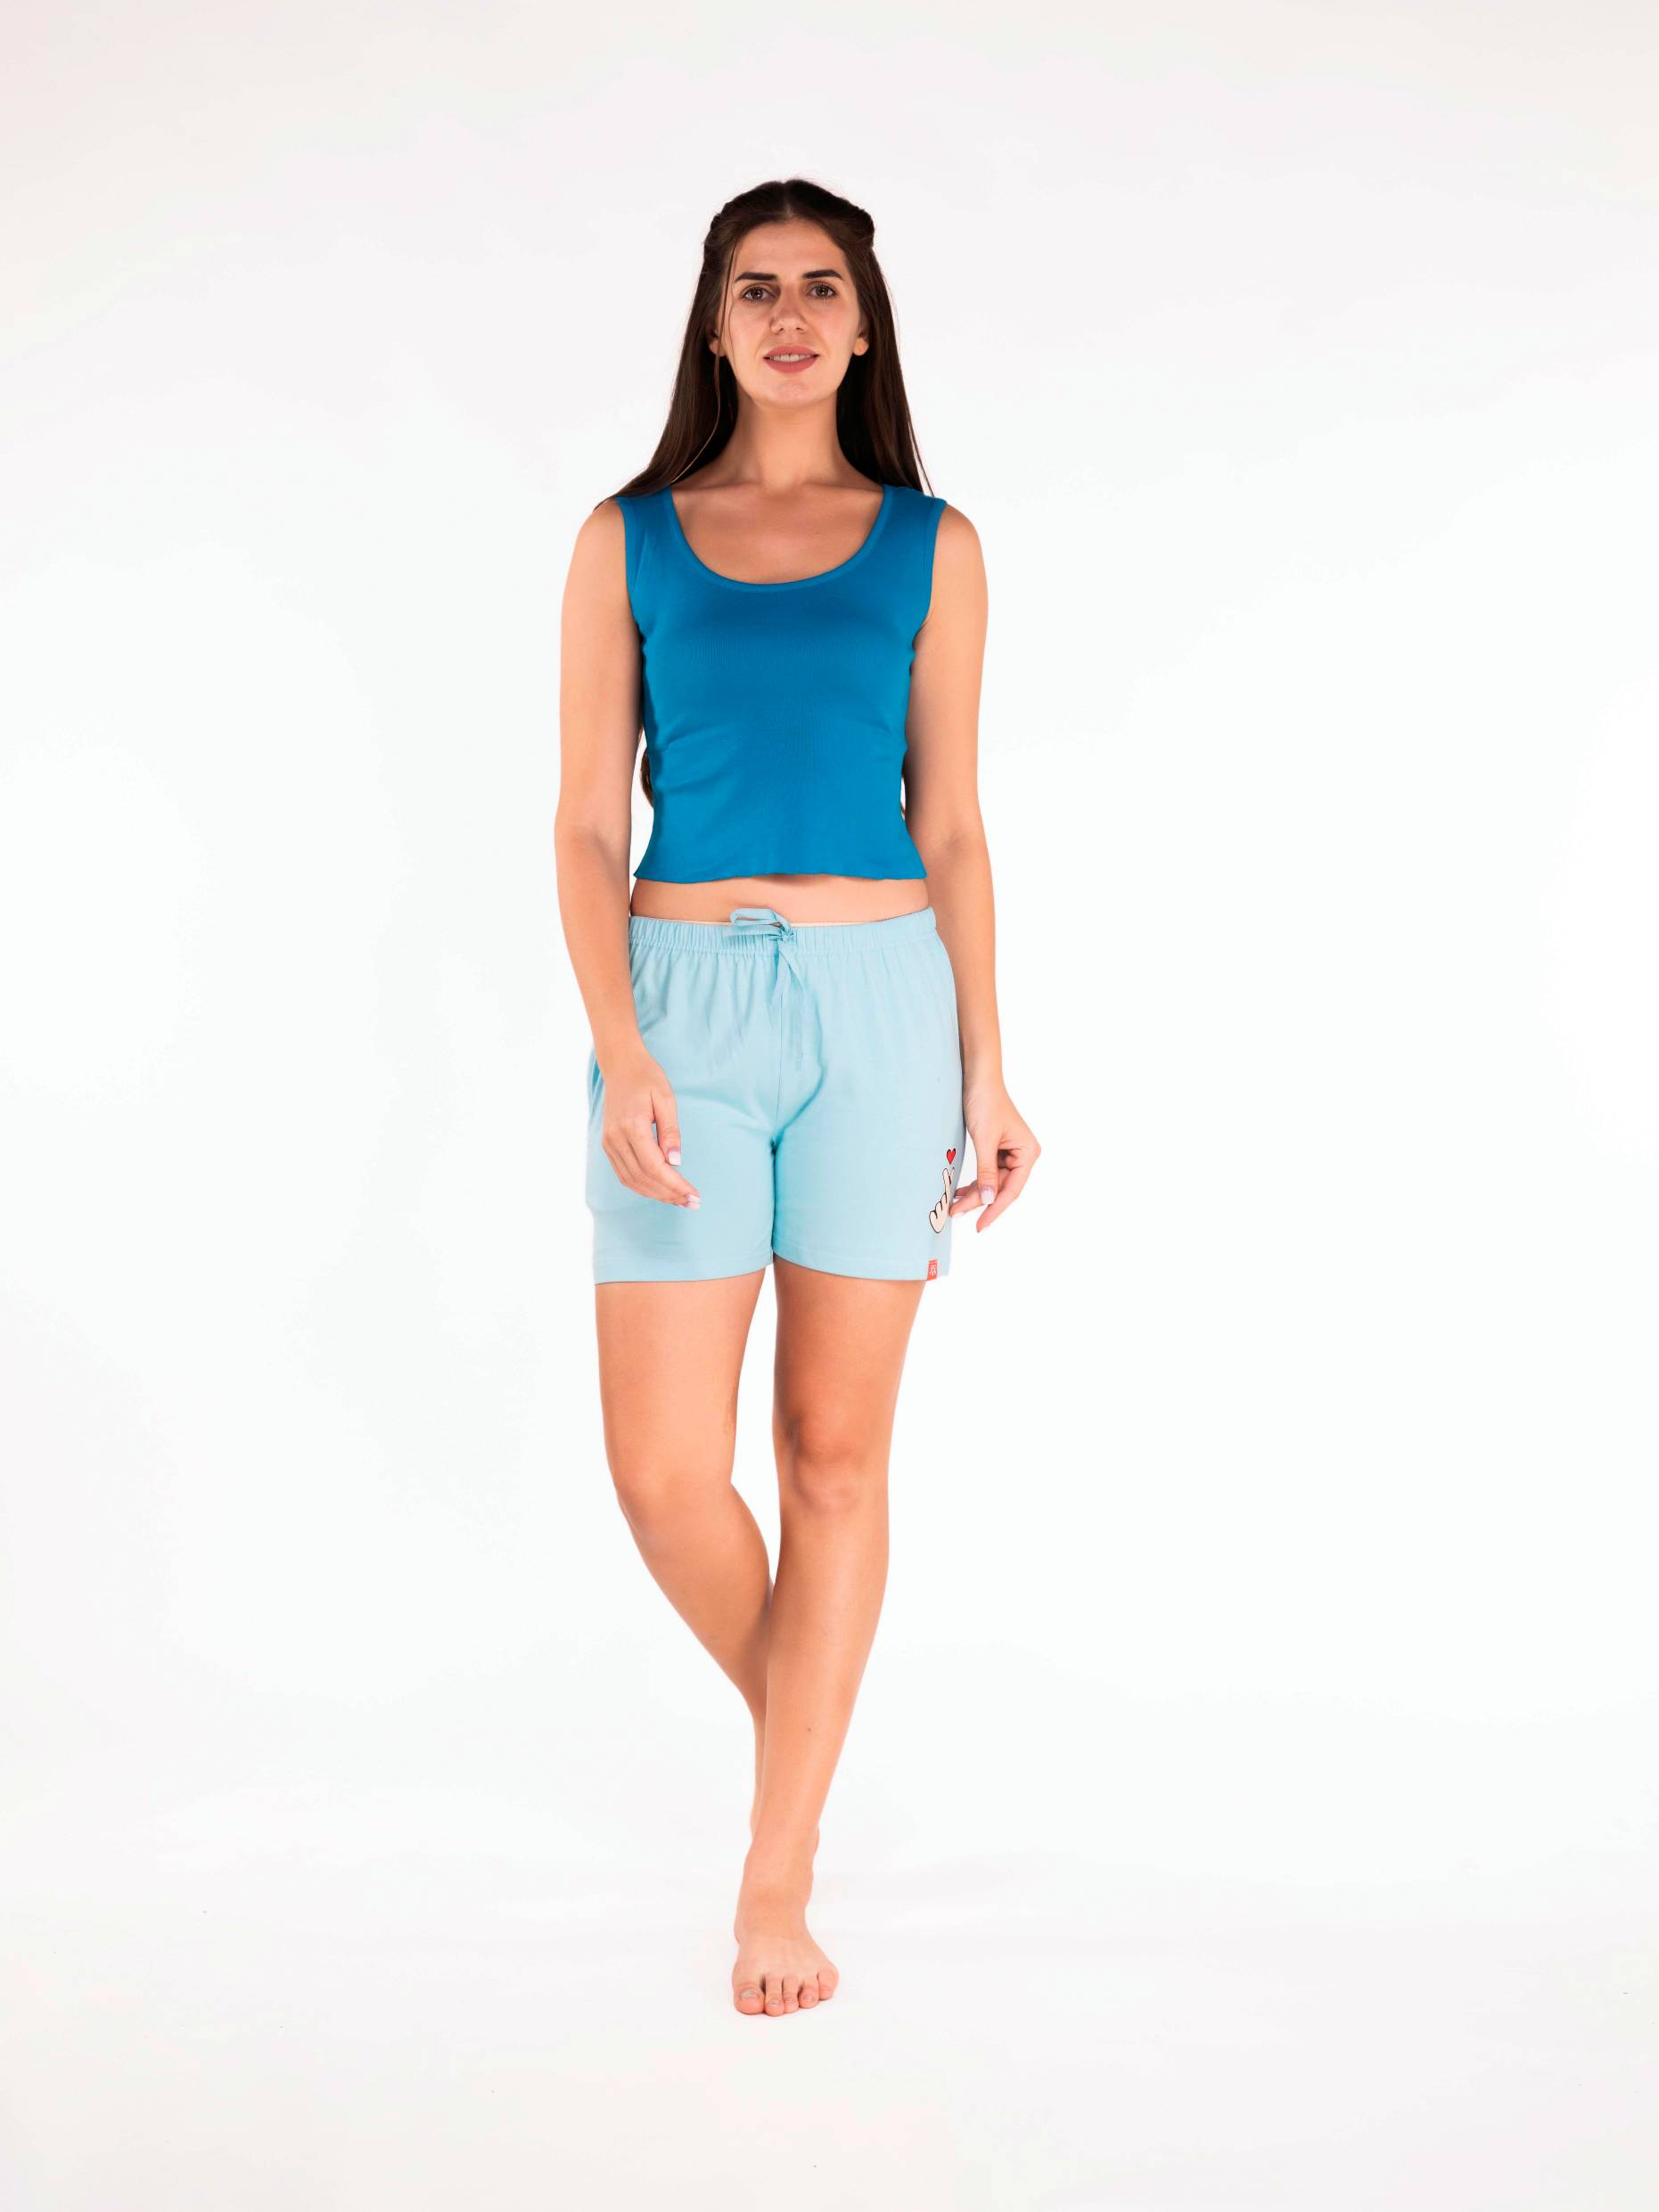 Evolove Women's Pajama Shorts Slacks with Elastic Waist Band Cotton Printed Regular Fit (S-XXL Size)